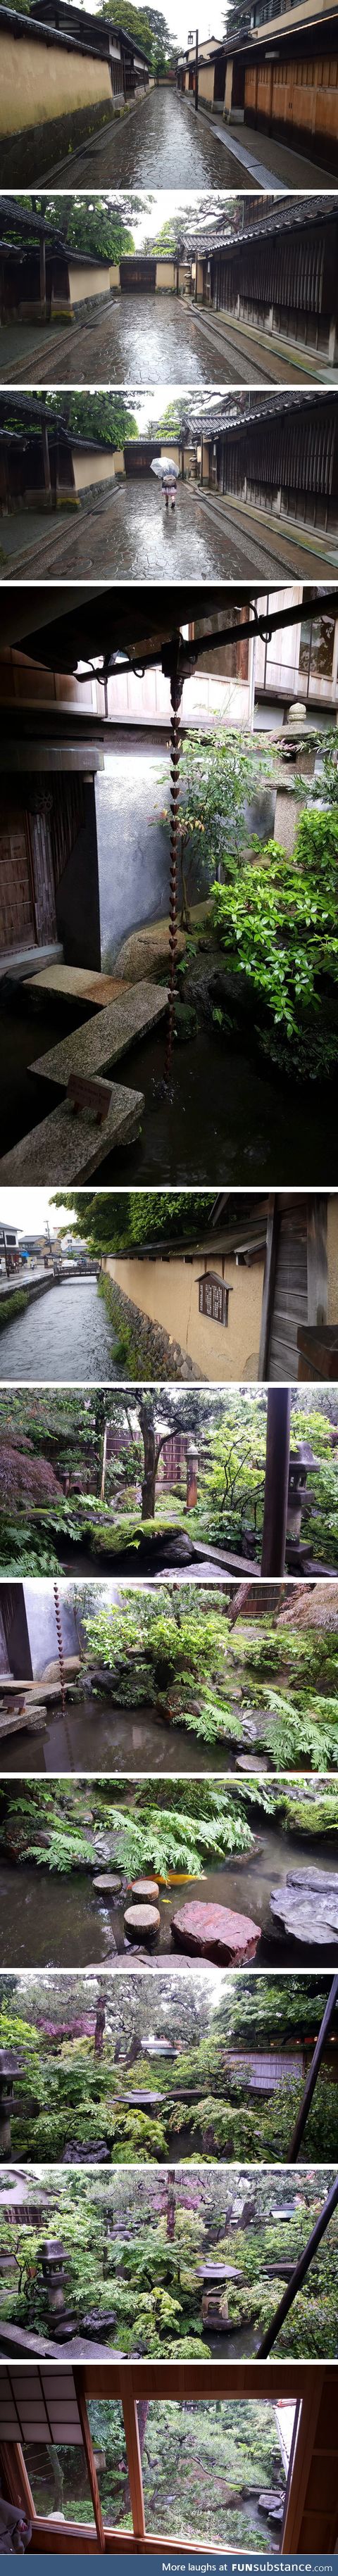 Photos from a preserved Samurai street and garden